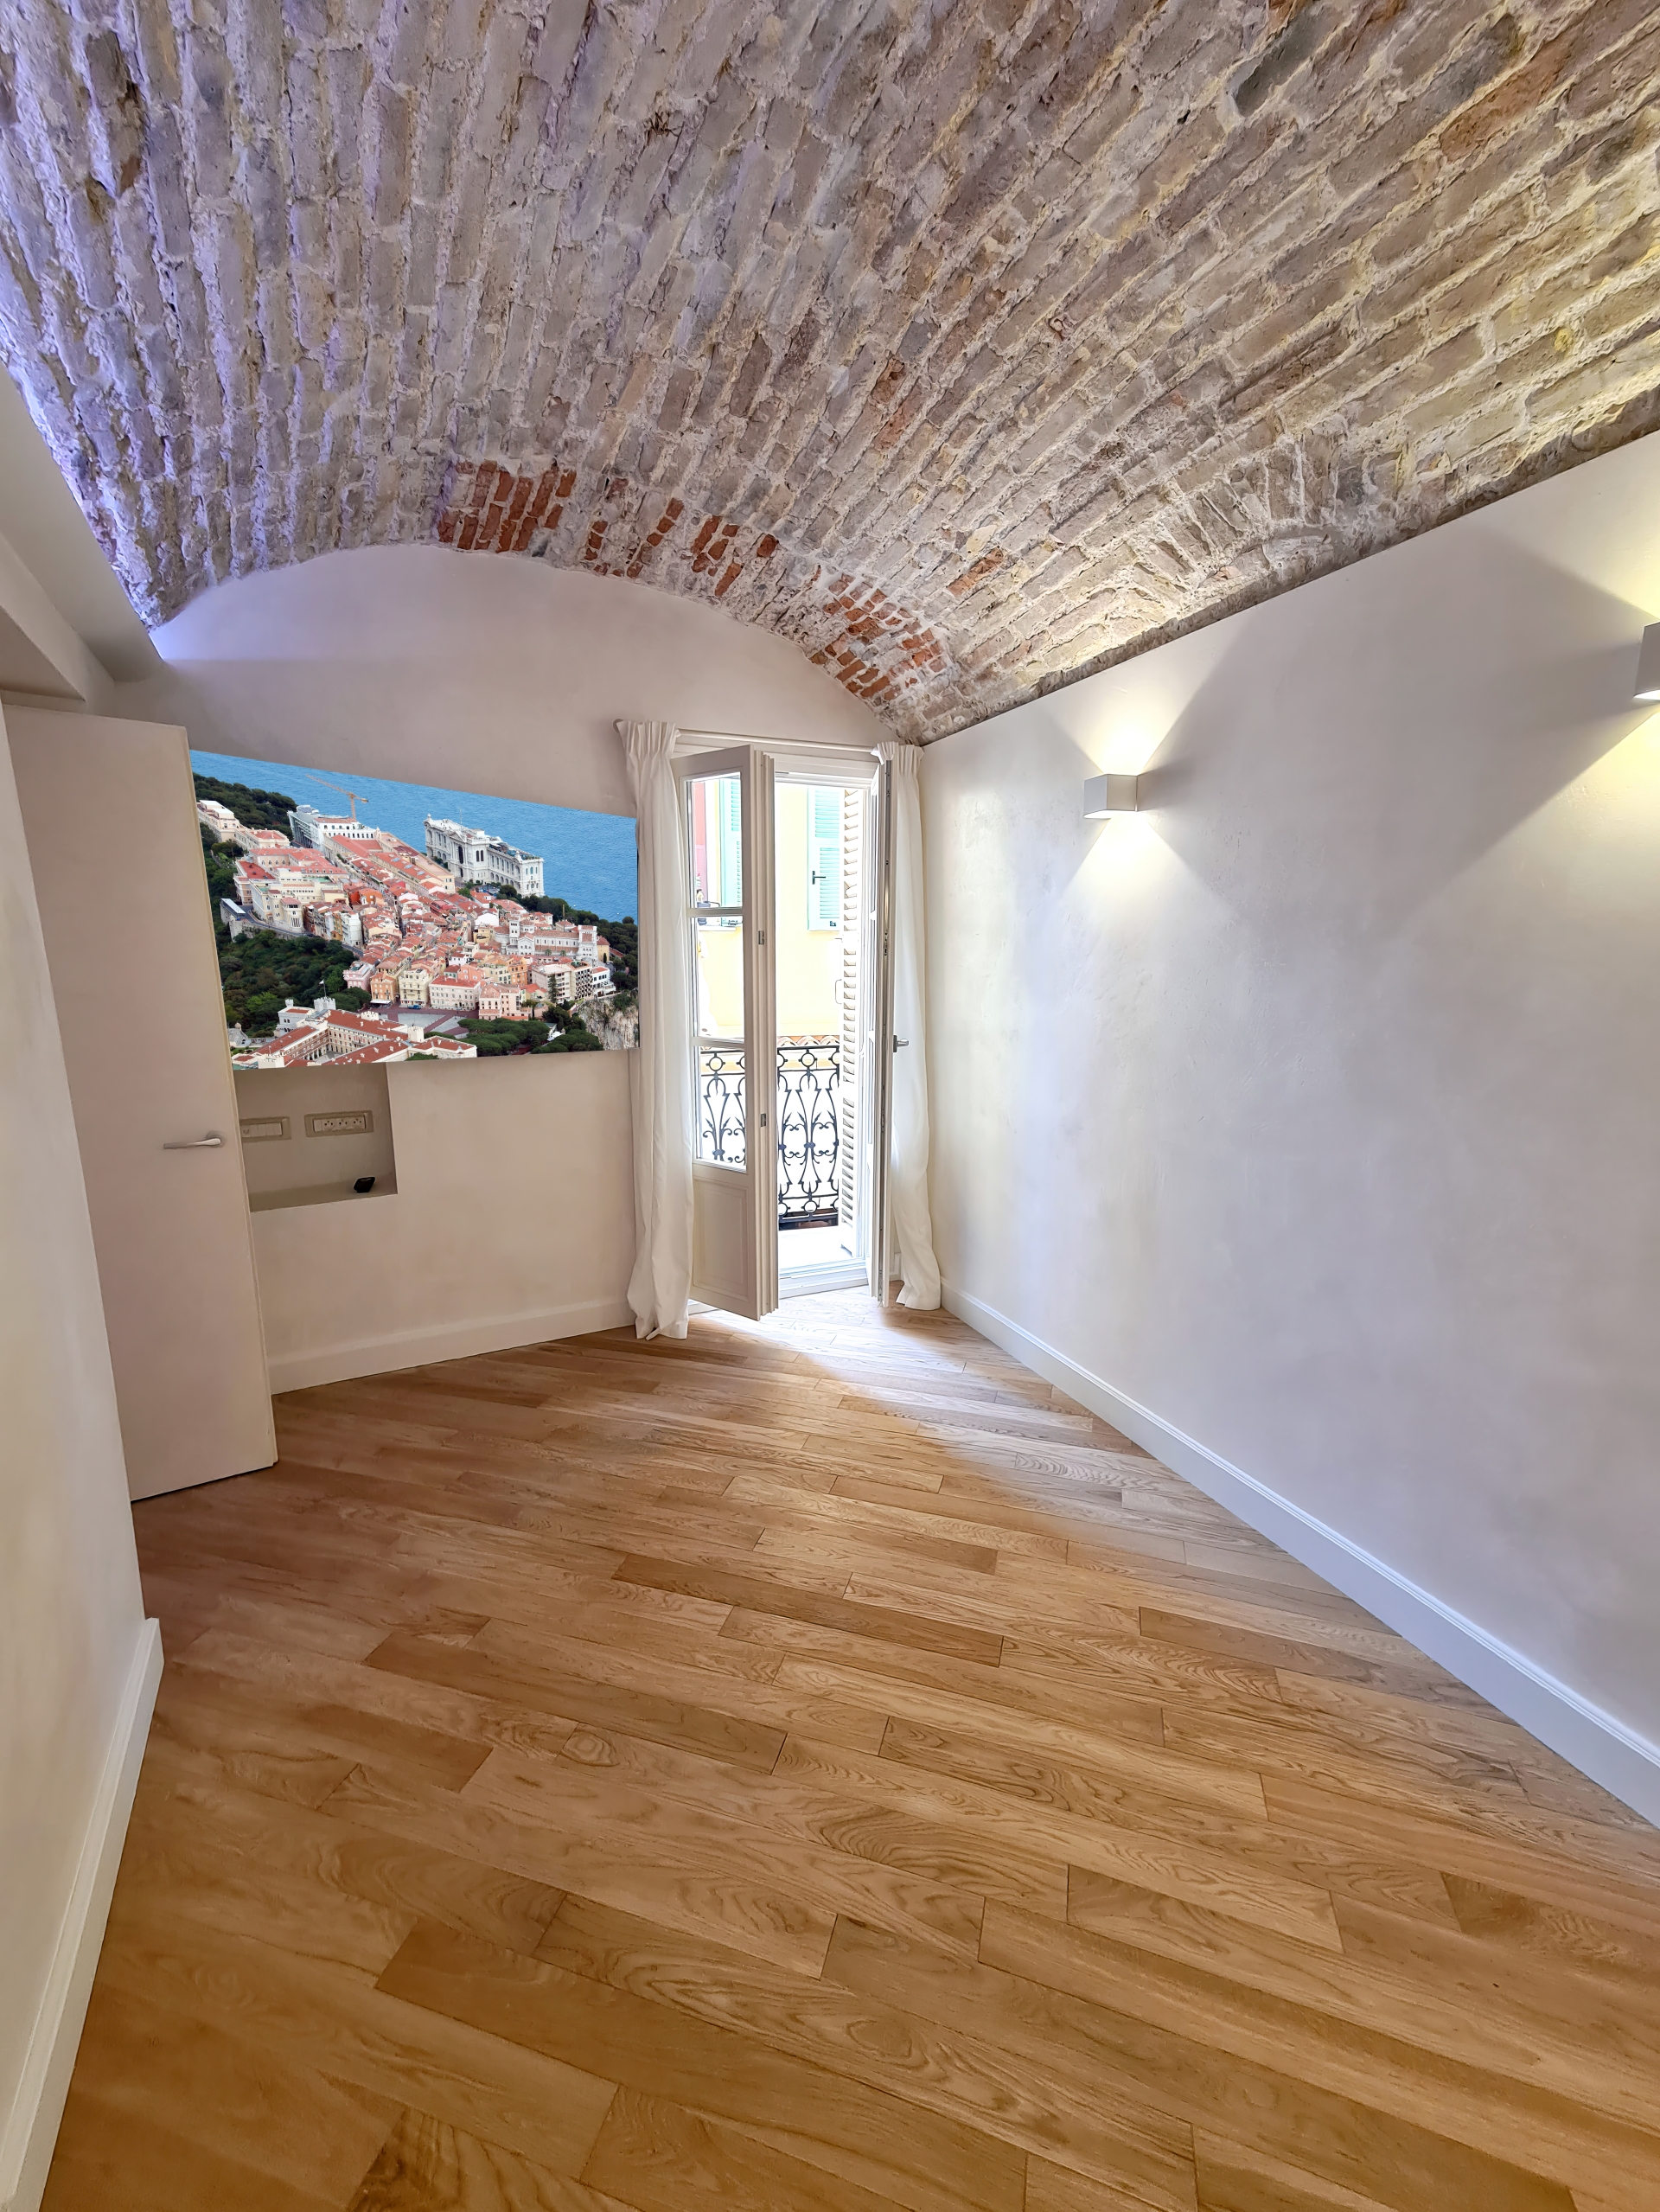 Dotta Appartement de 4 pieces a vendre - 32 rue Felix Gastaldi - Monaco-Ville - Monaco - imgpierre3